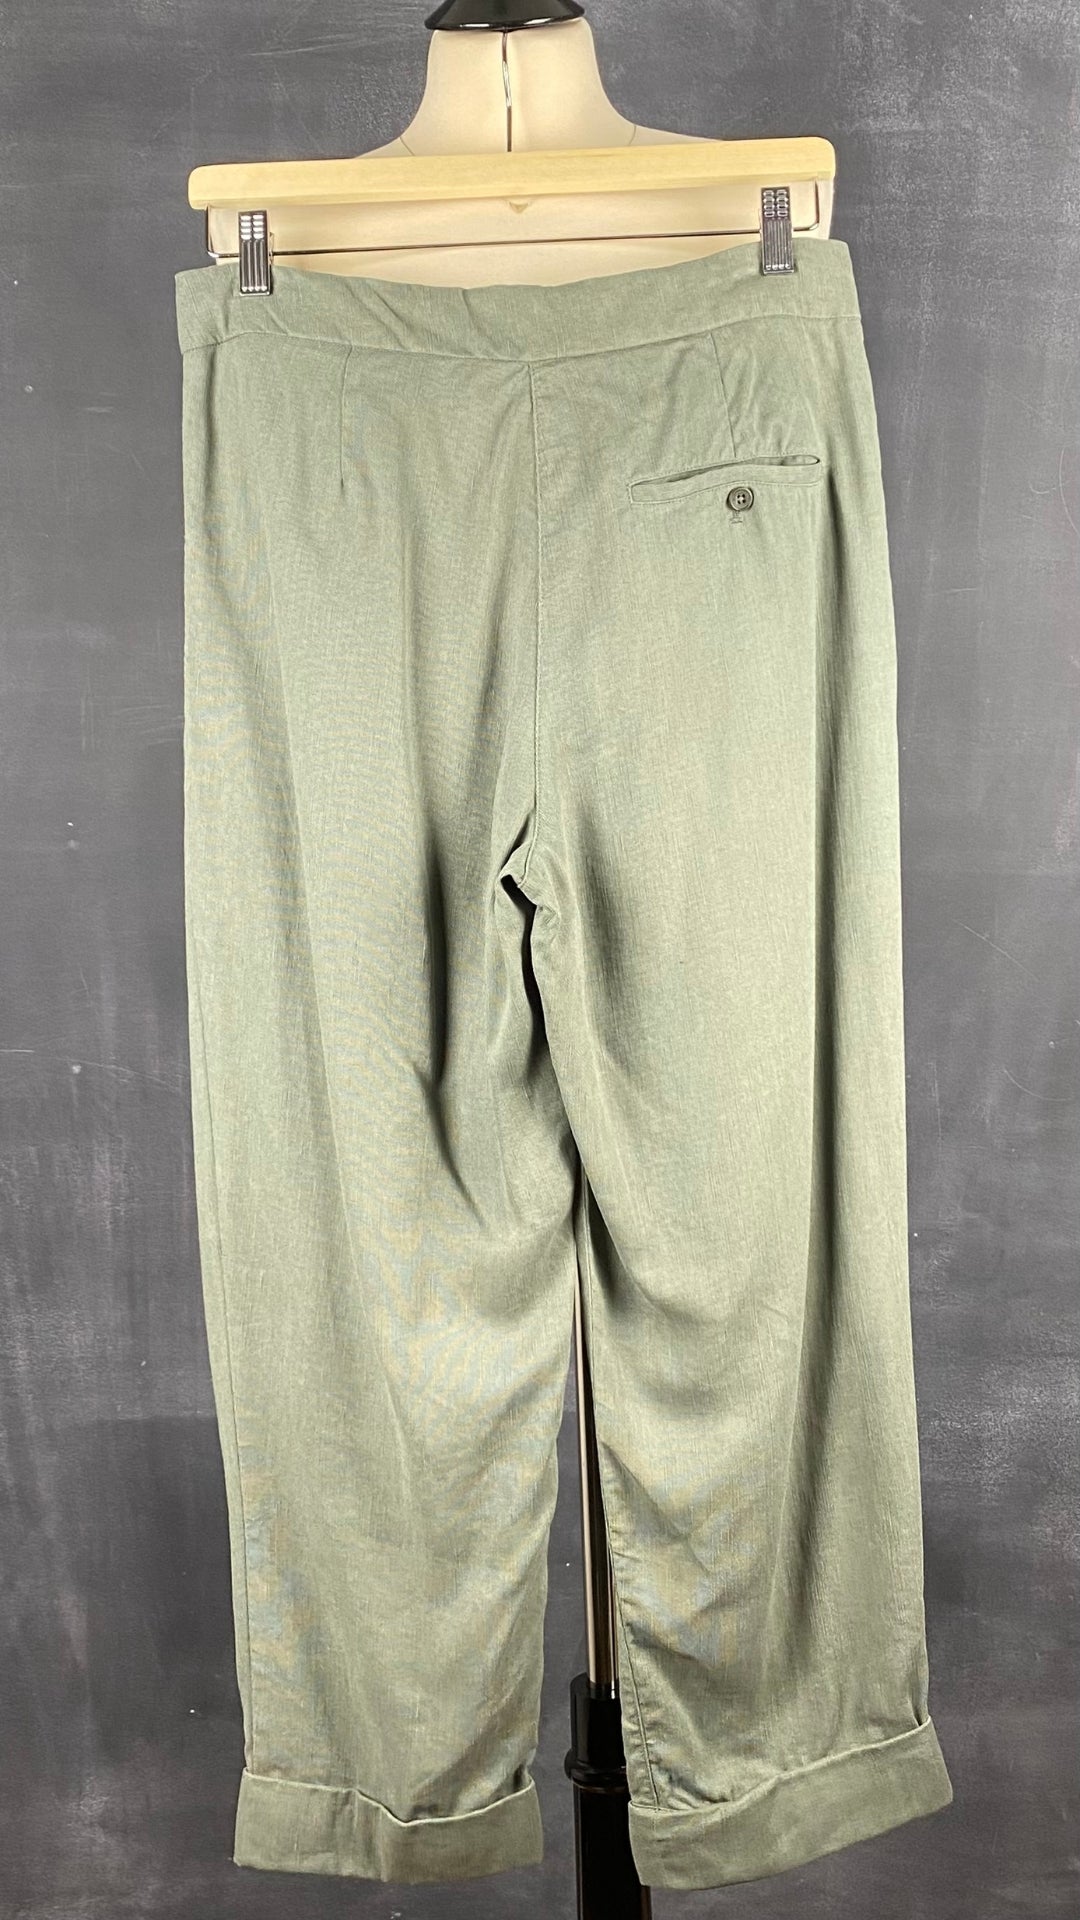 Pantalon vert en lyocell et lin Wilfred, taille 8. Vue de dos.